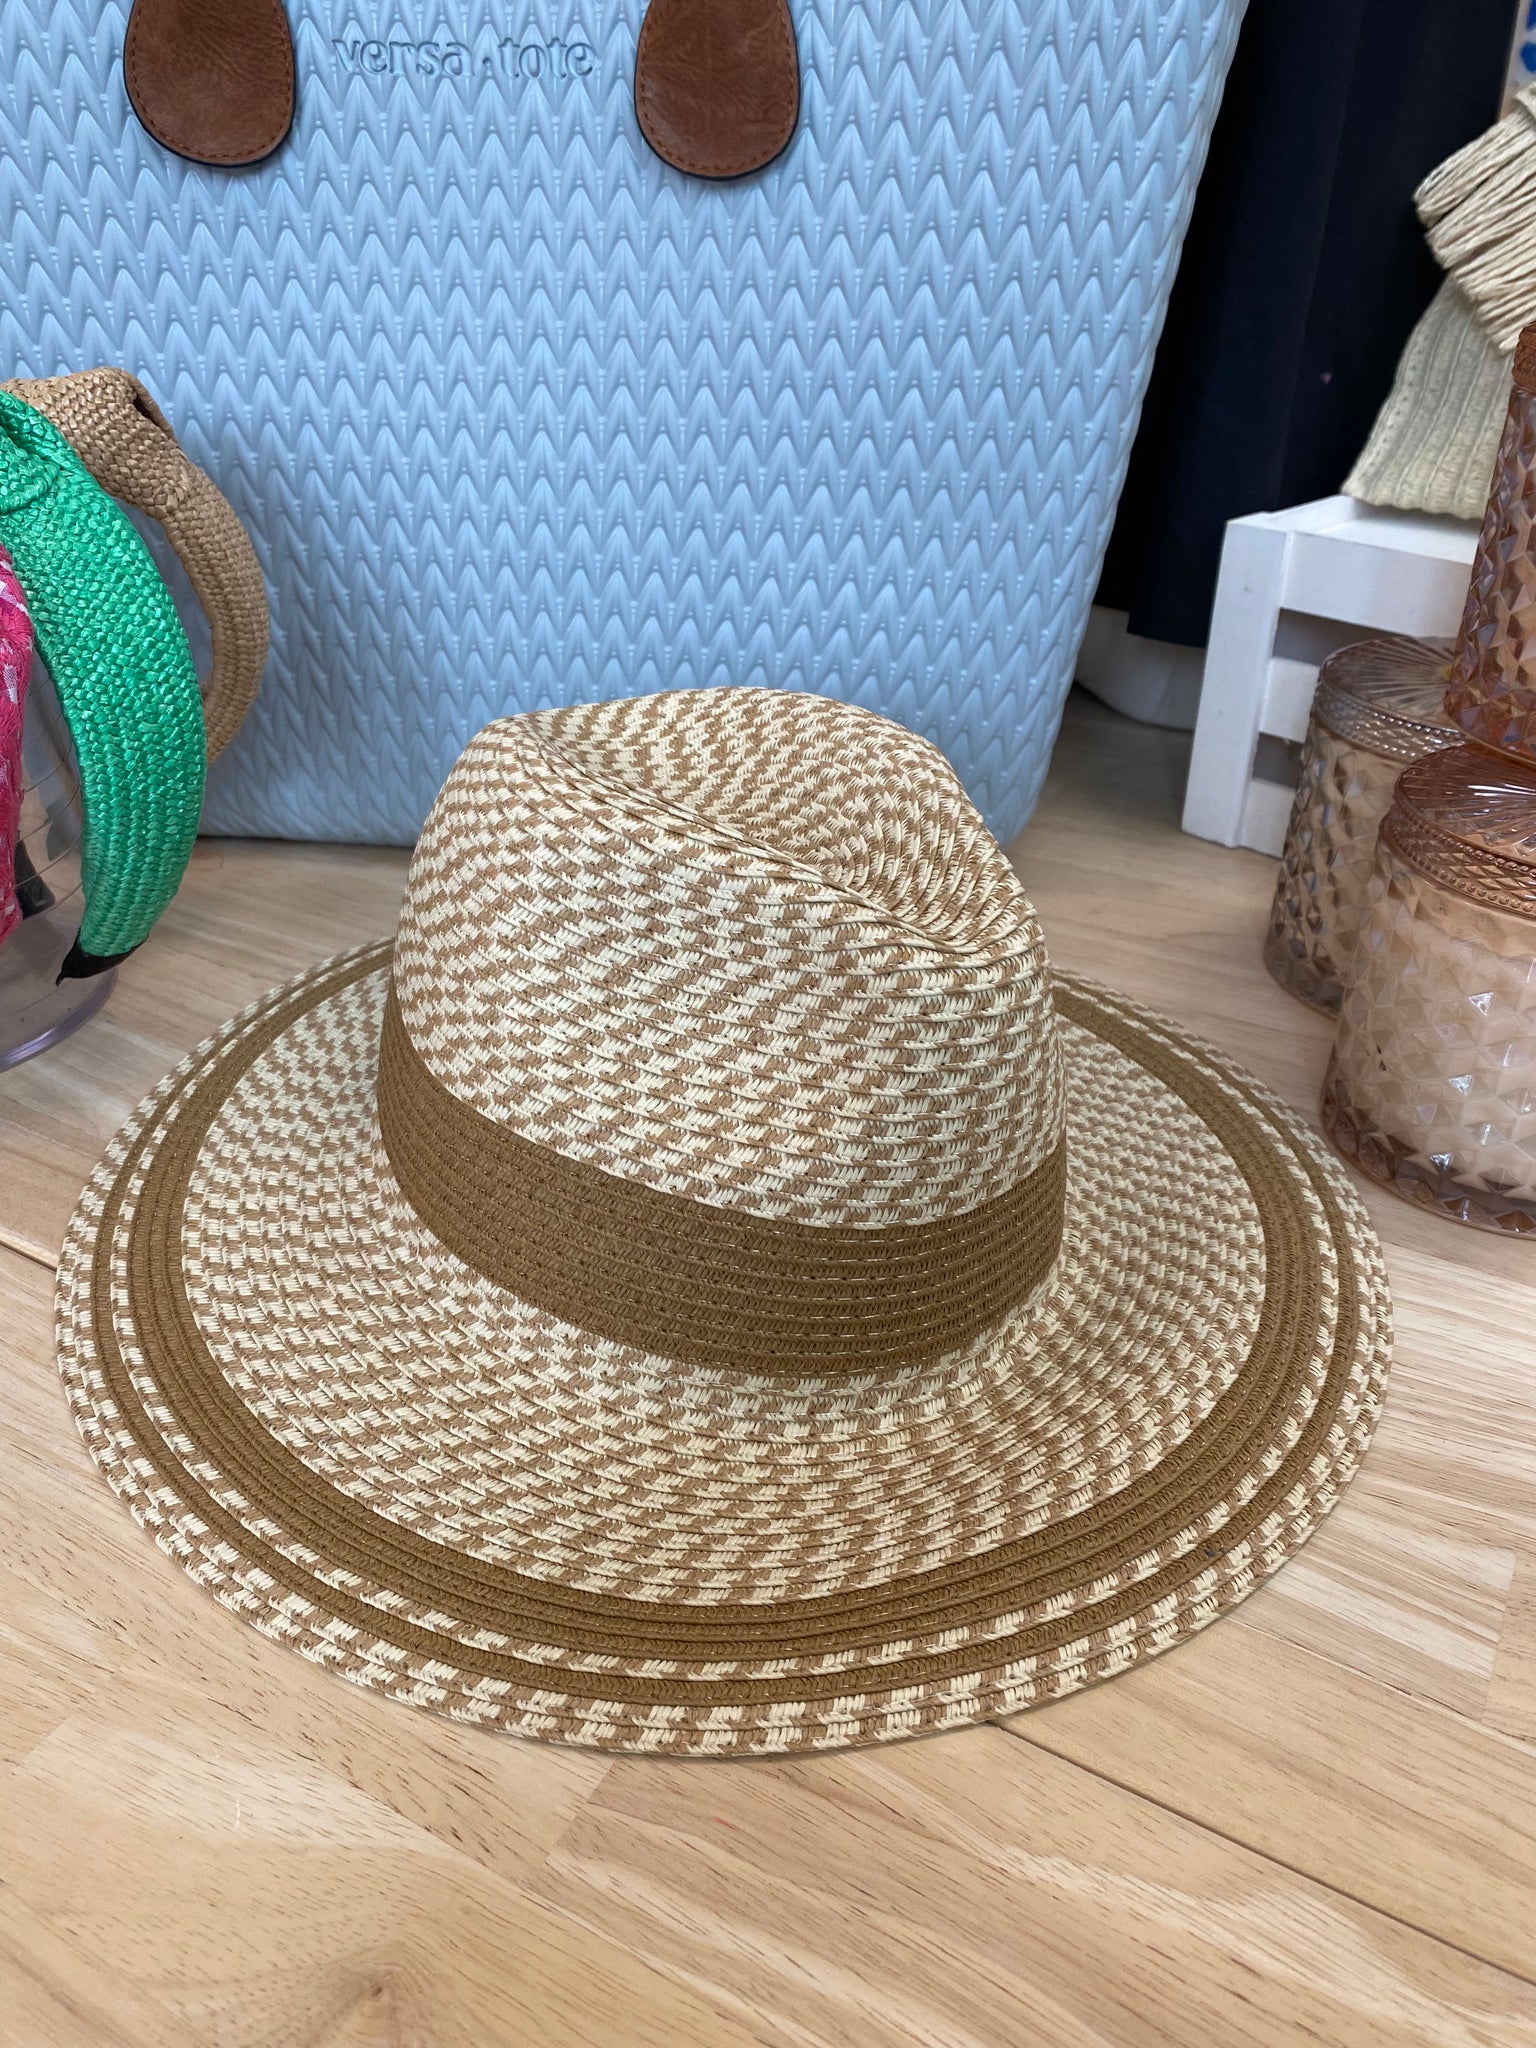 Tan Striped Sun Hat